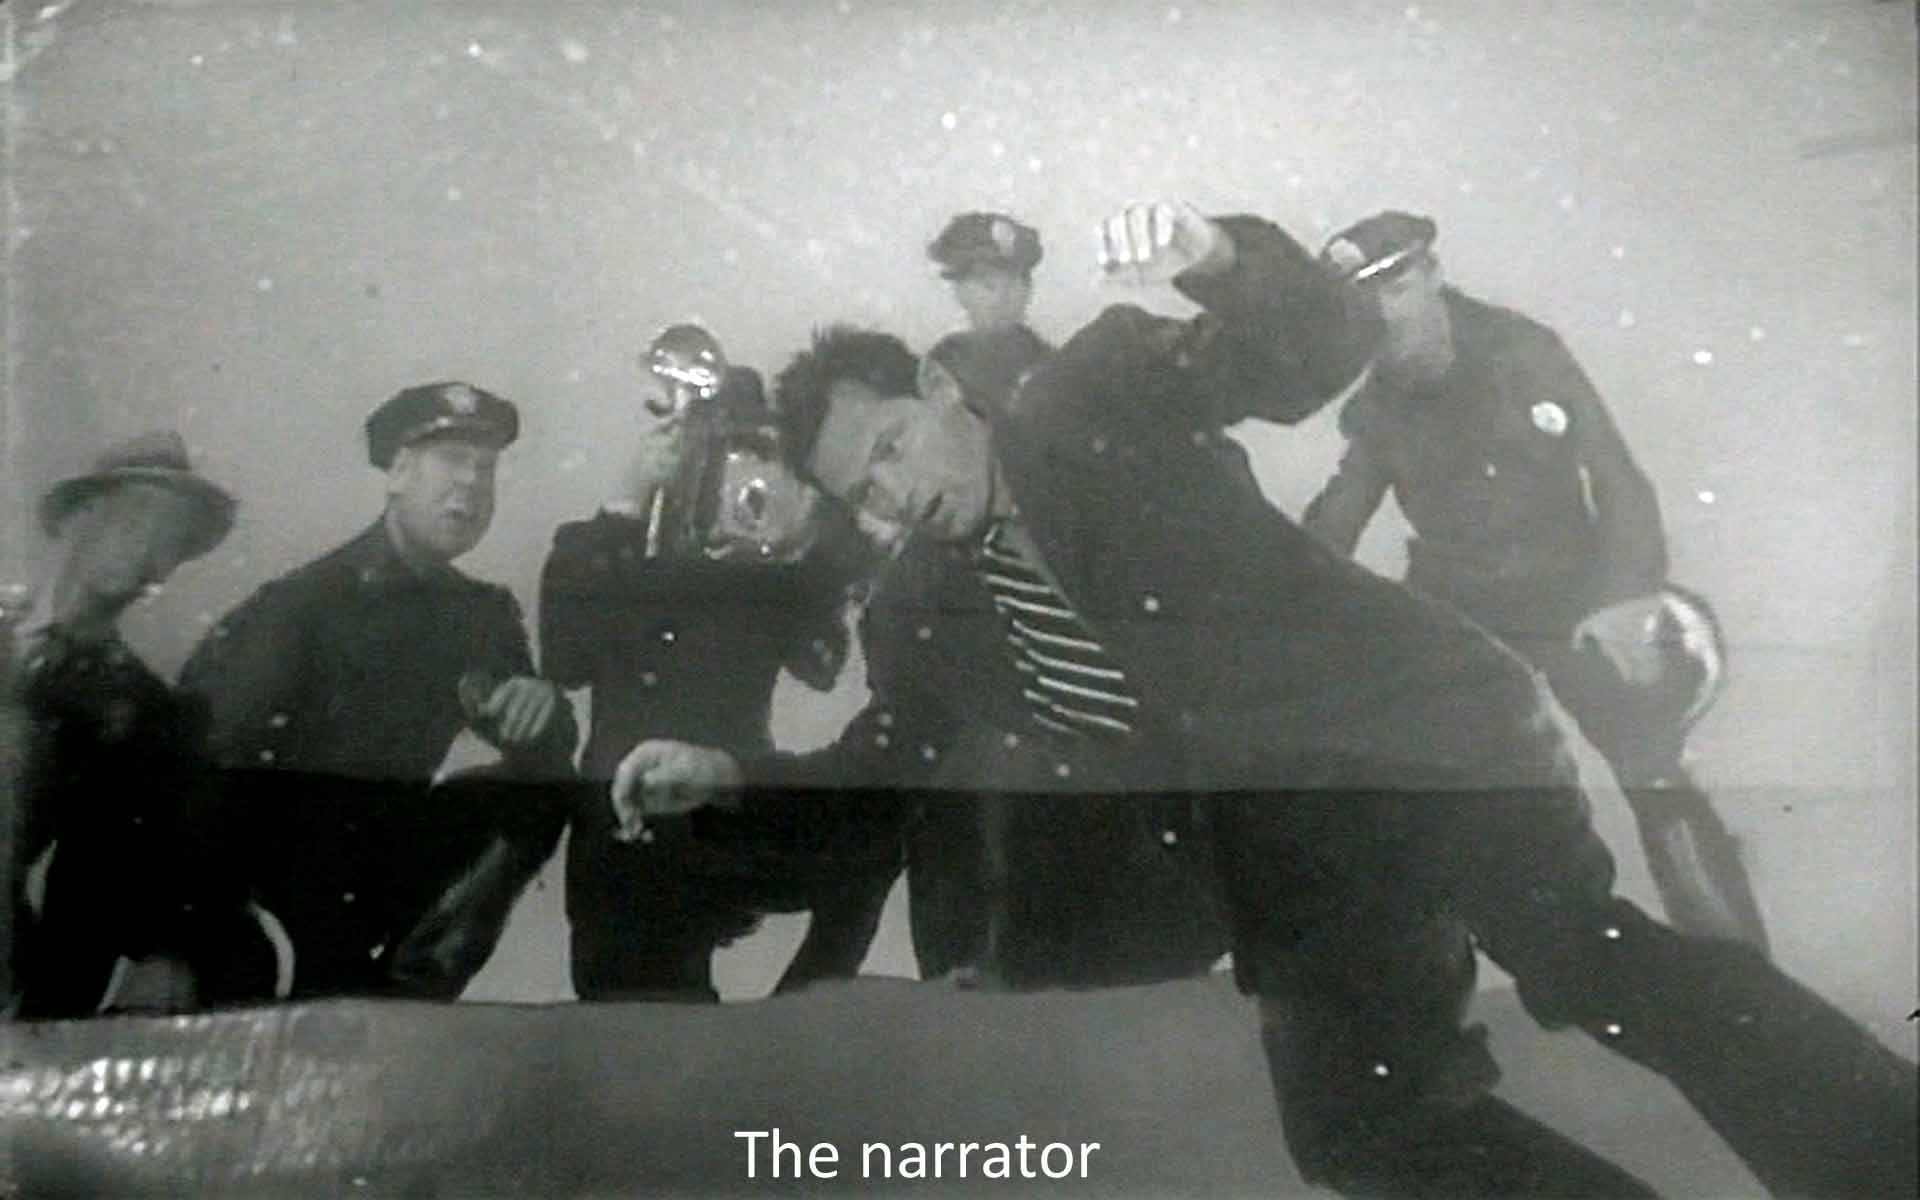 The narrator